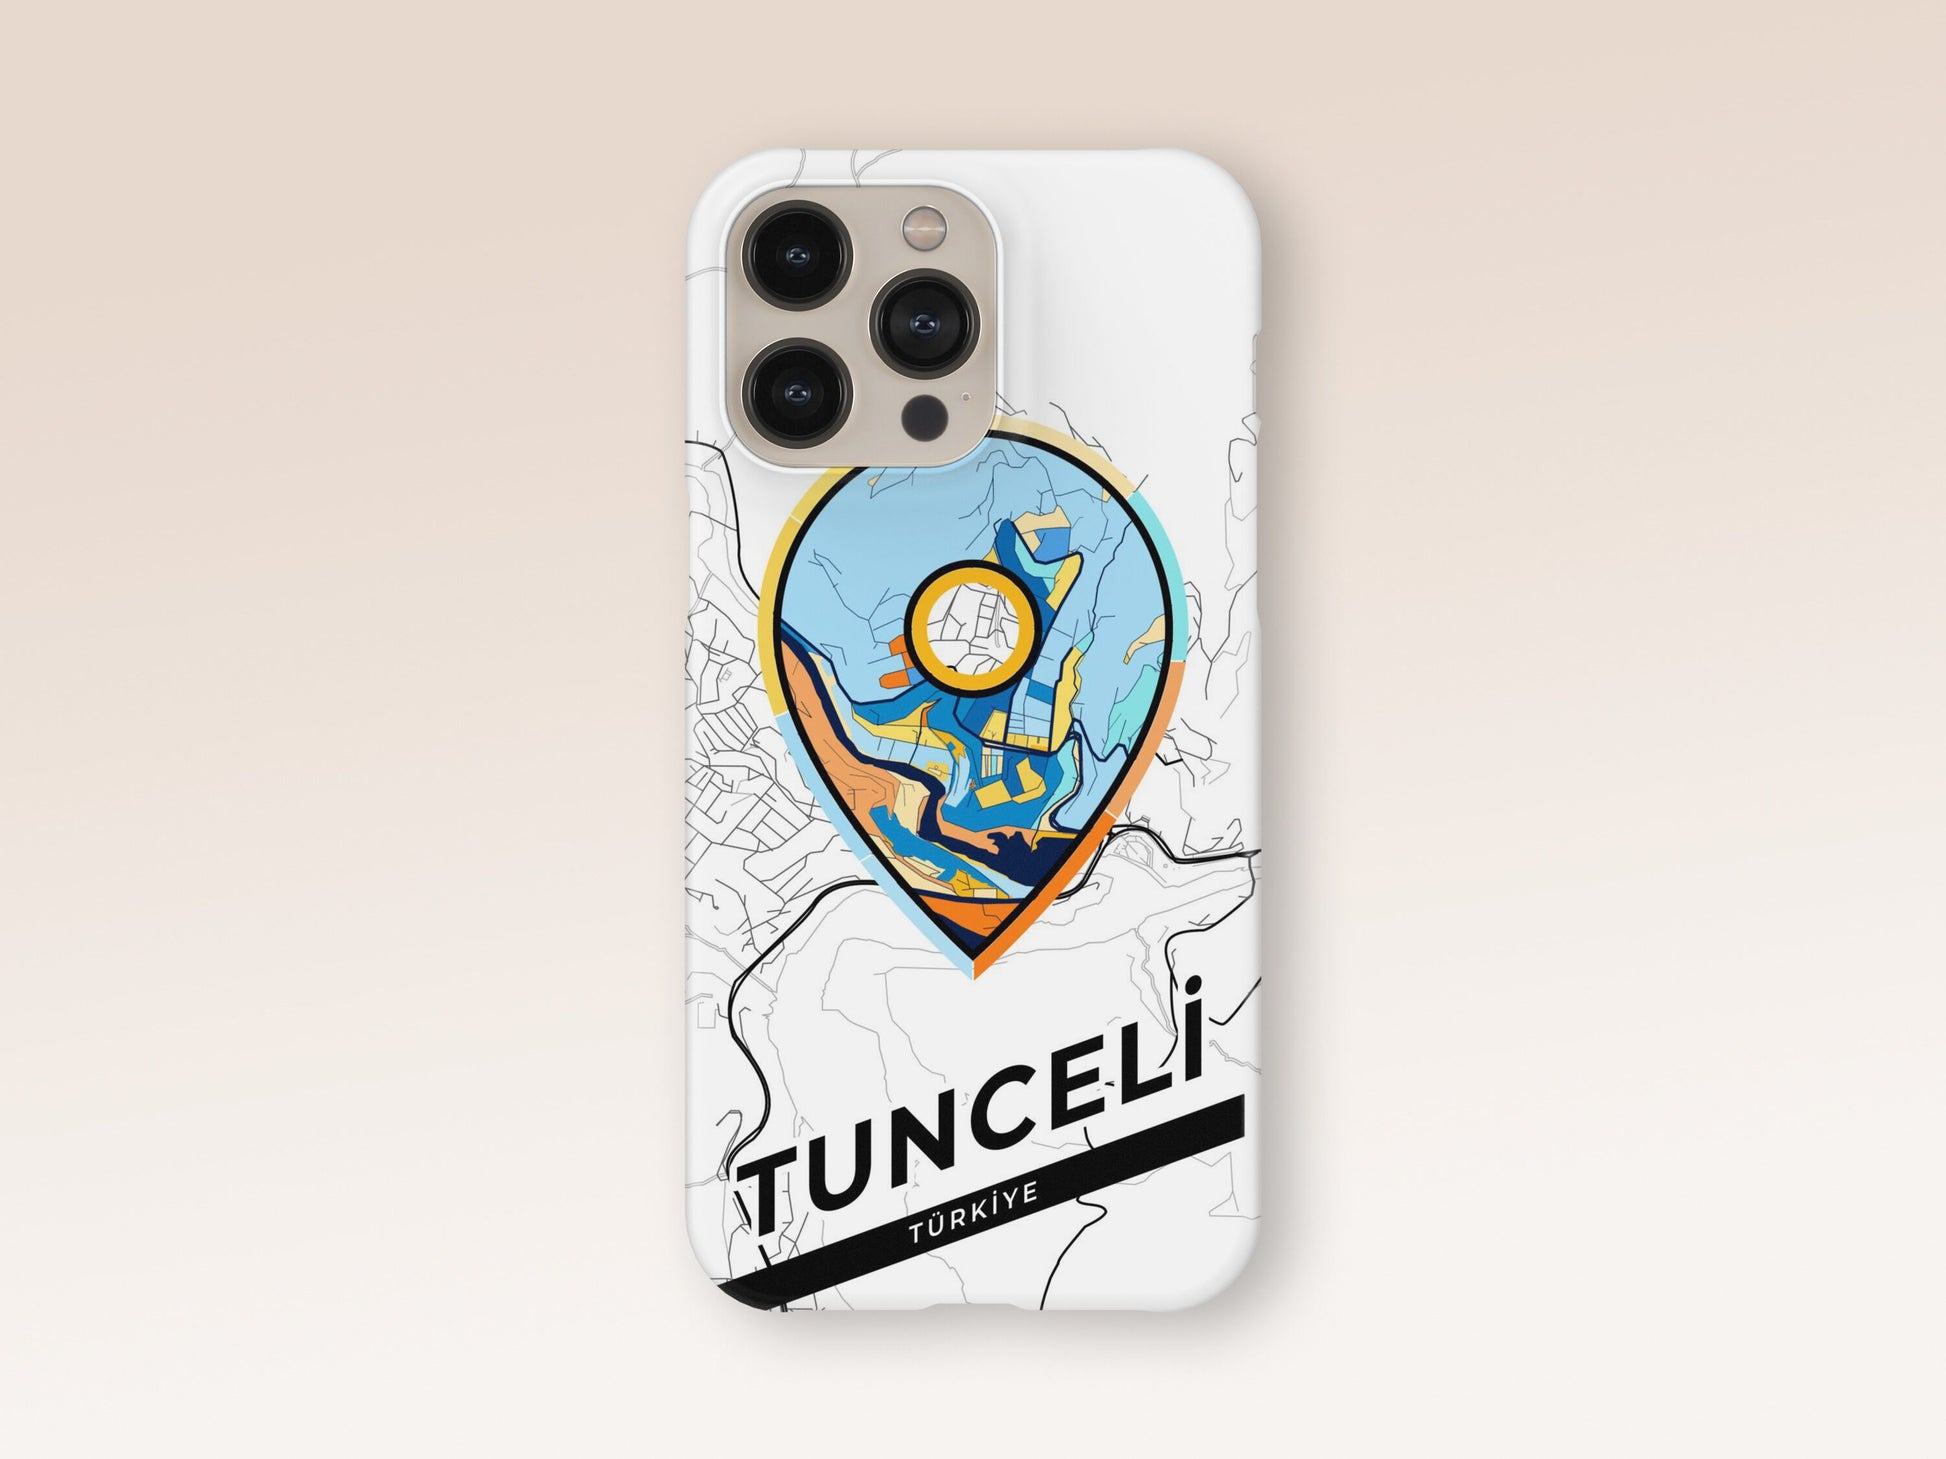 Tunceli Turkey slim phone case with colorful icon 1